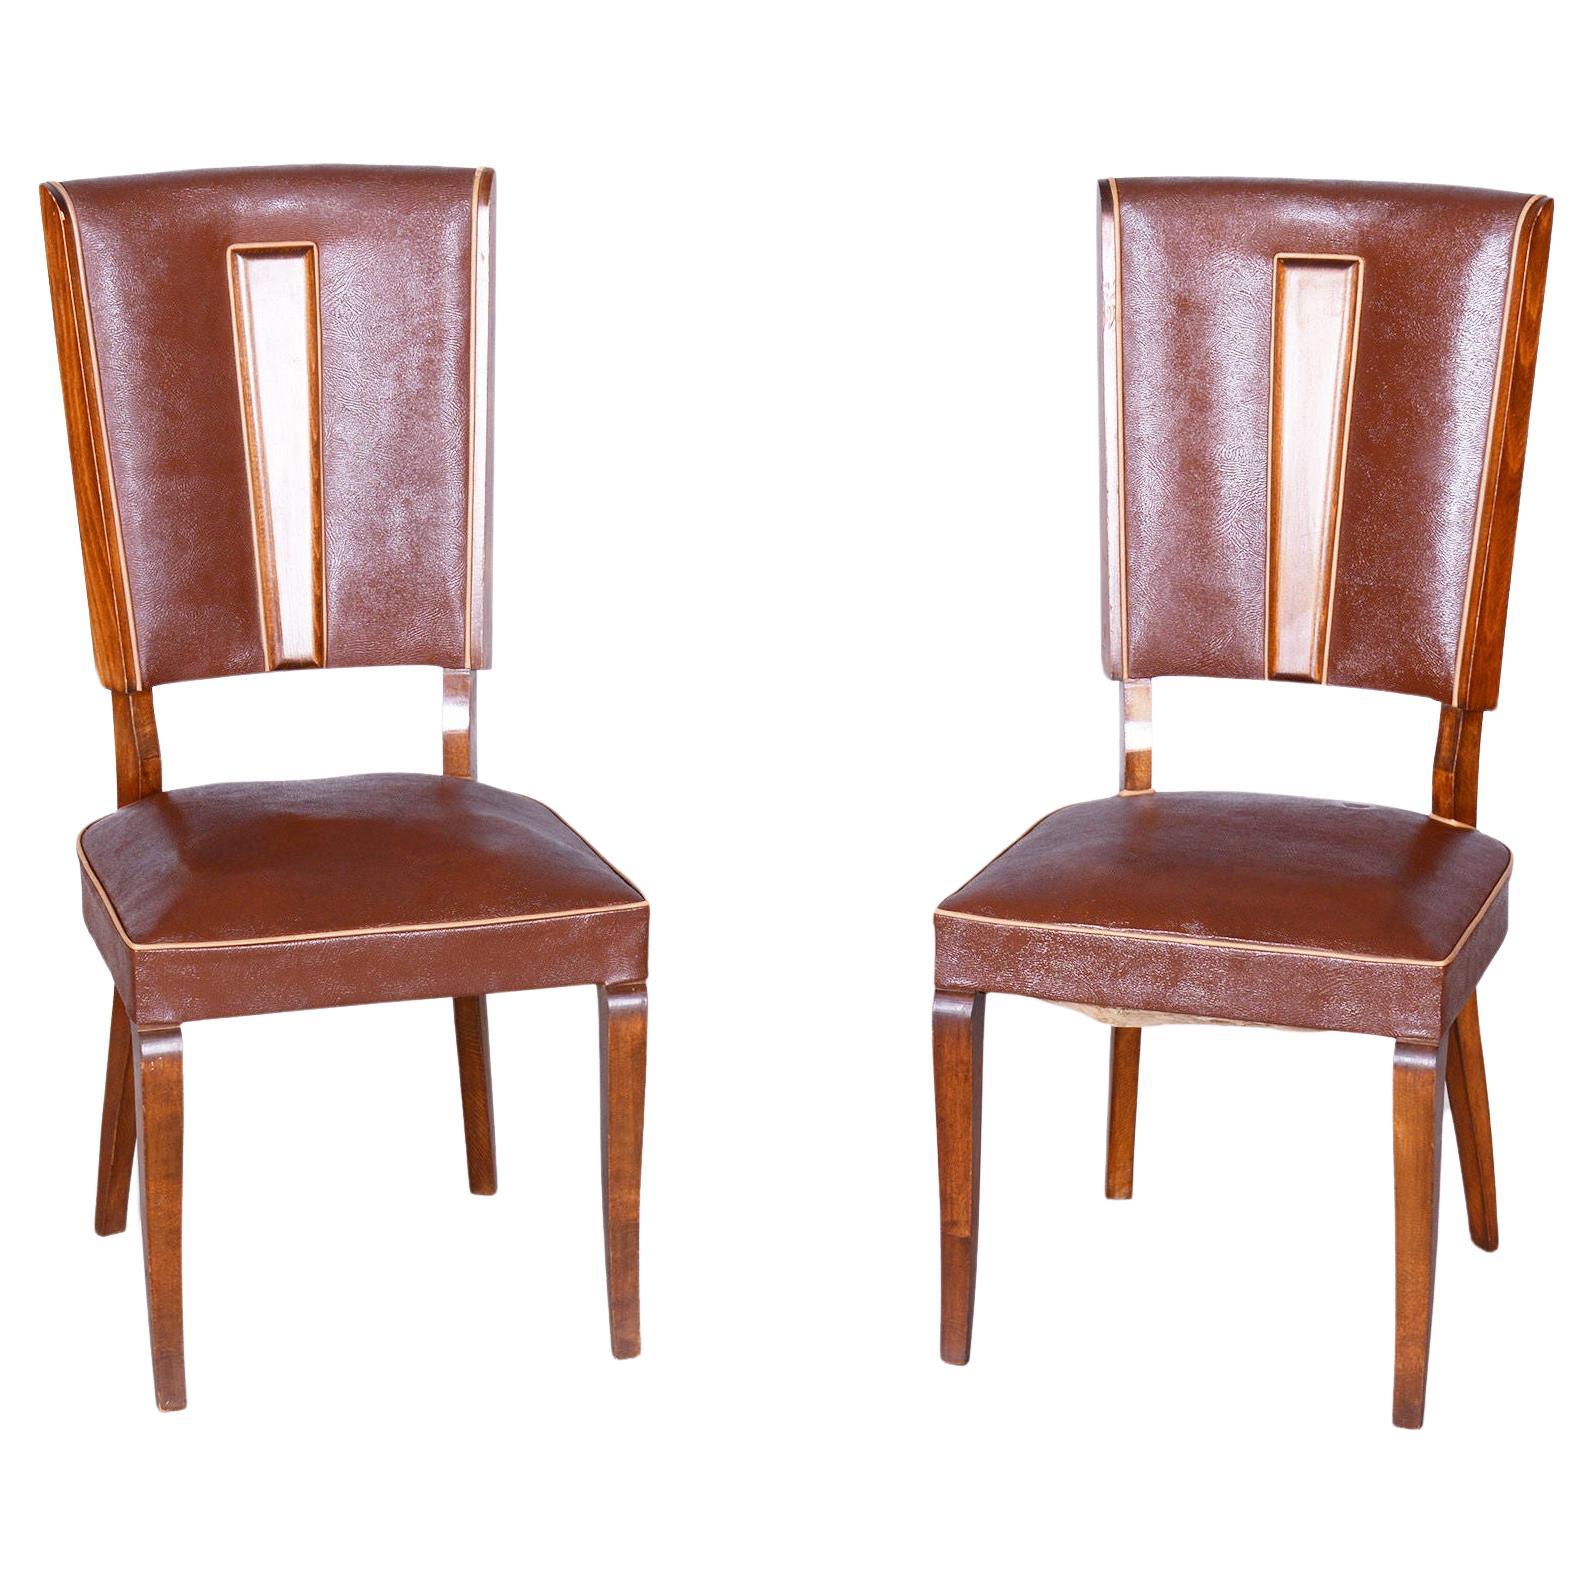 Pair of Original Art Deco Chairs, by Jules Leleu, Beech, France, 1920s